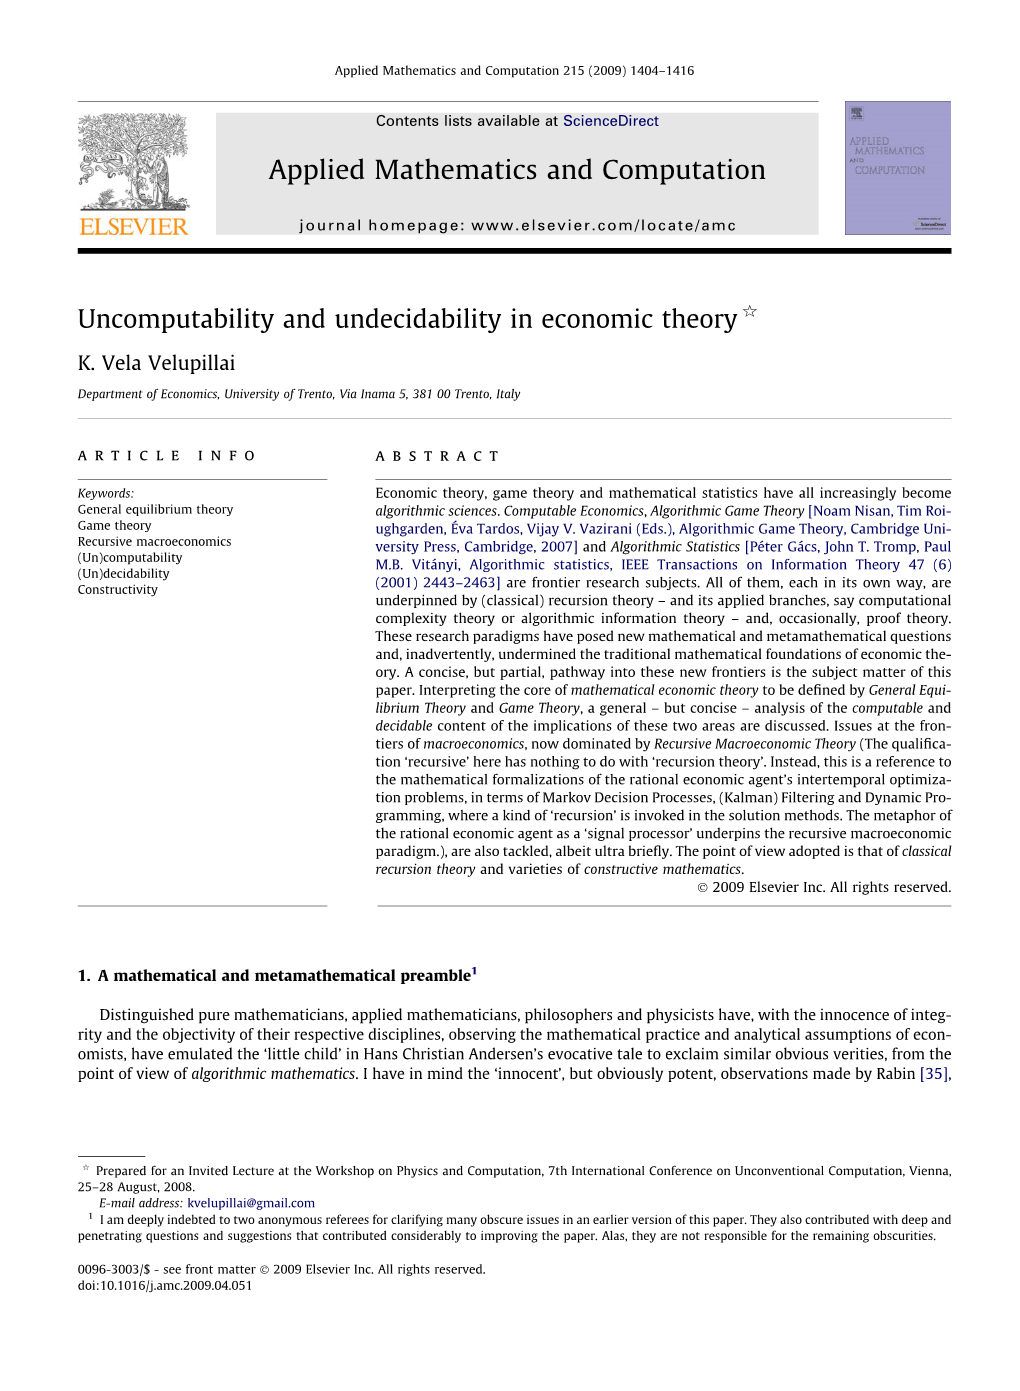 Uncomputability and Undecidability in Economic Theory Q